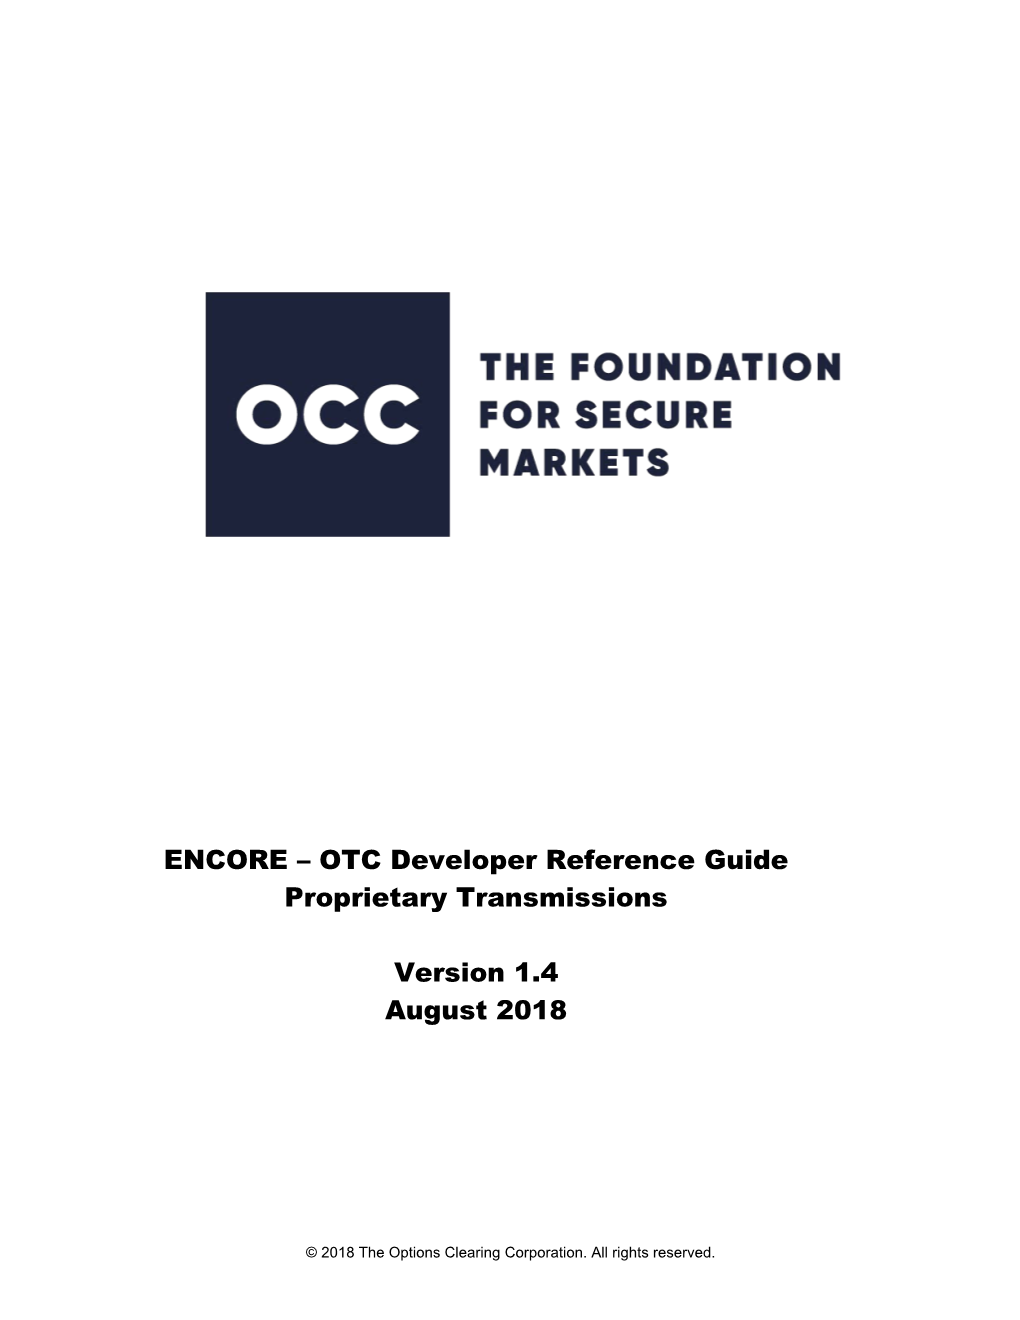 ENCORE OTC Developer Reference Guide Proprietary Transmissions